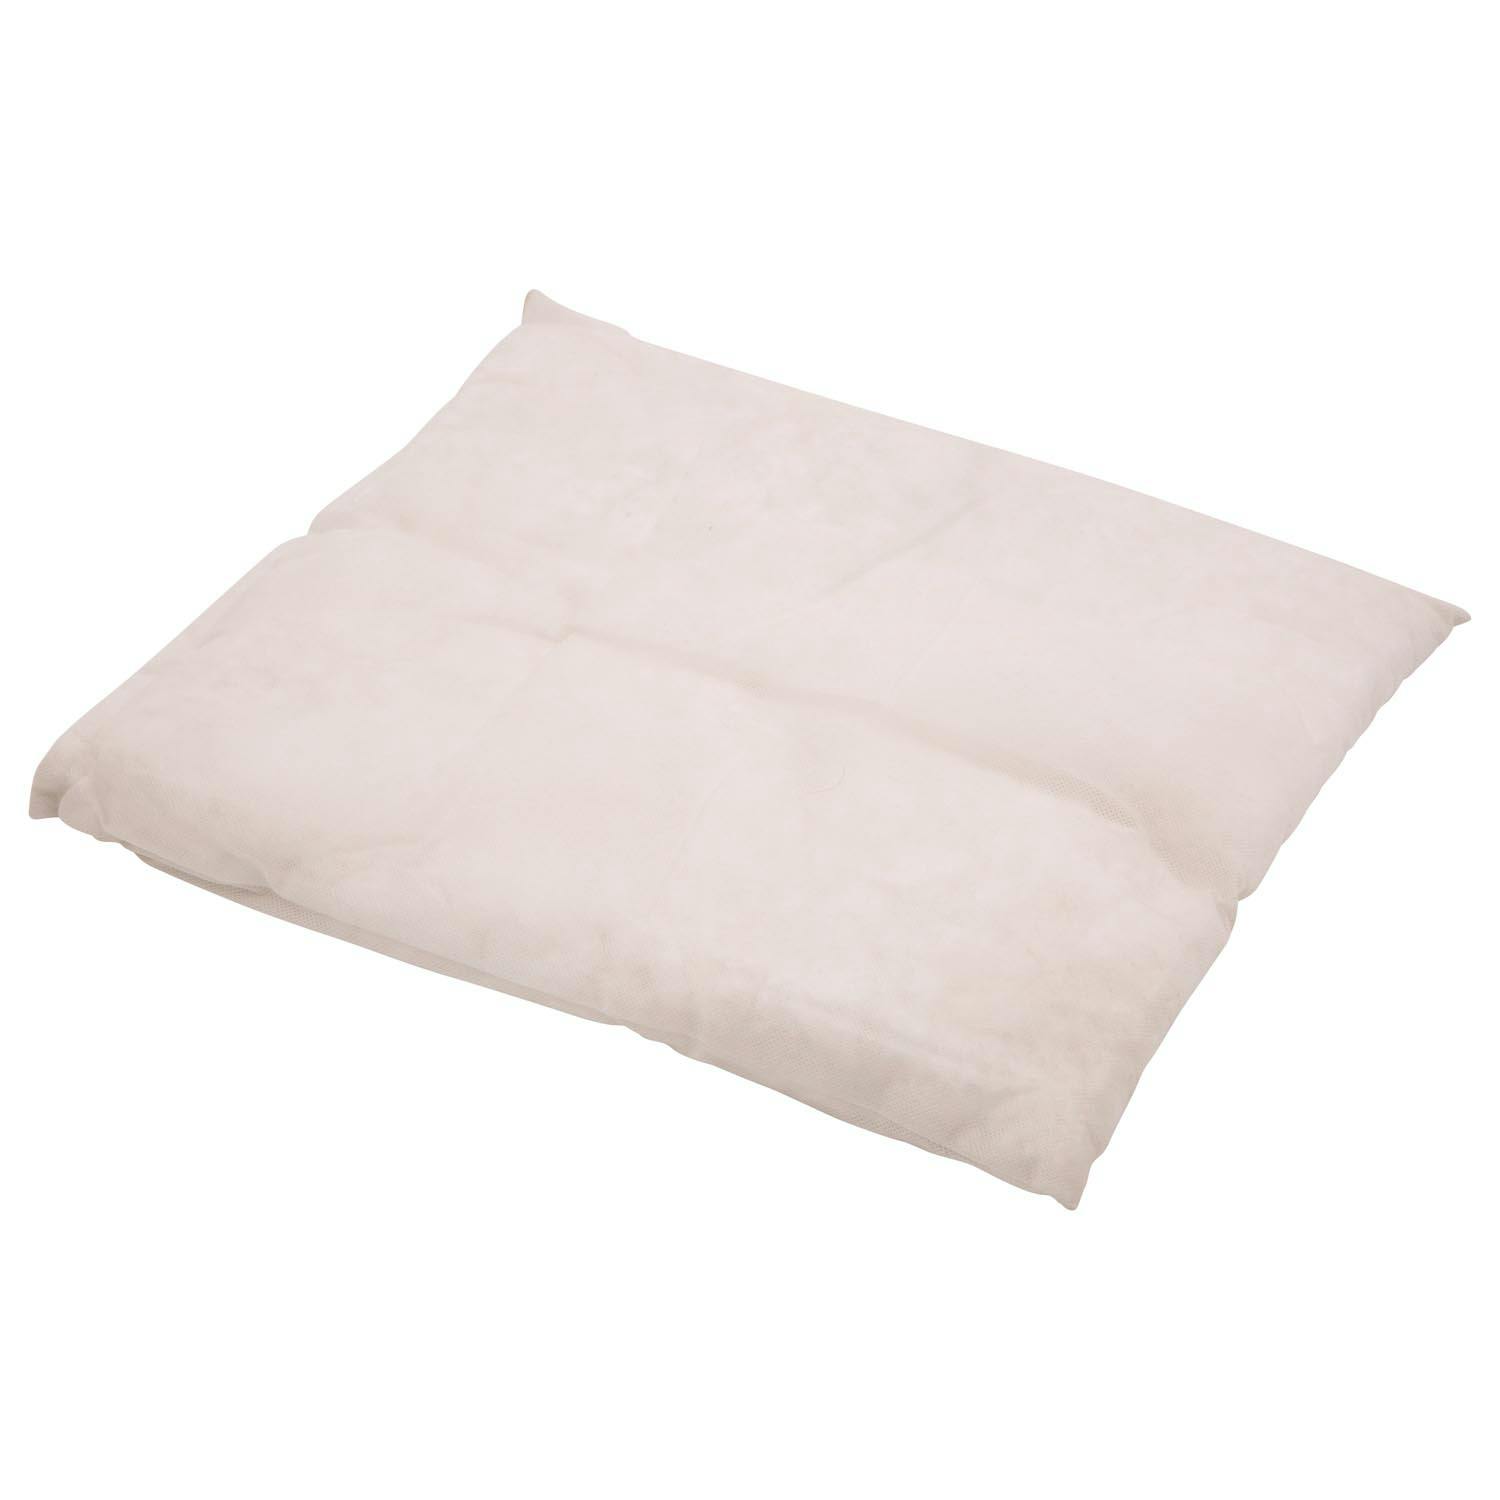 Pratt White Oil/Fuelâ Pillow - 420G